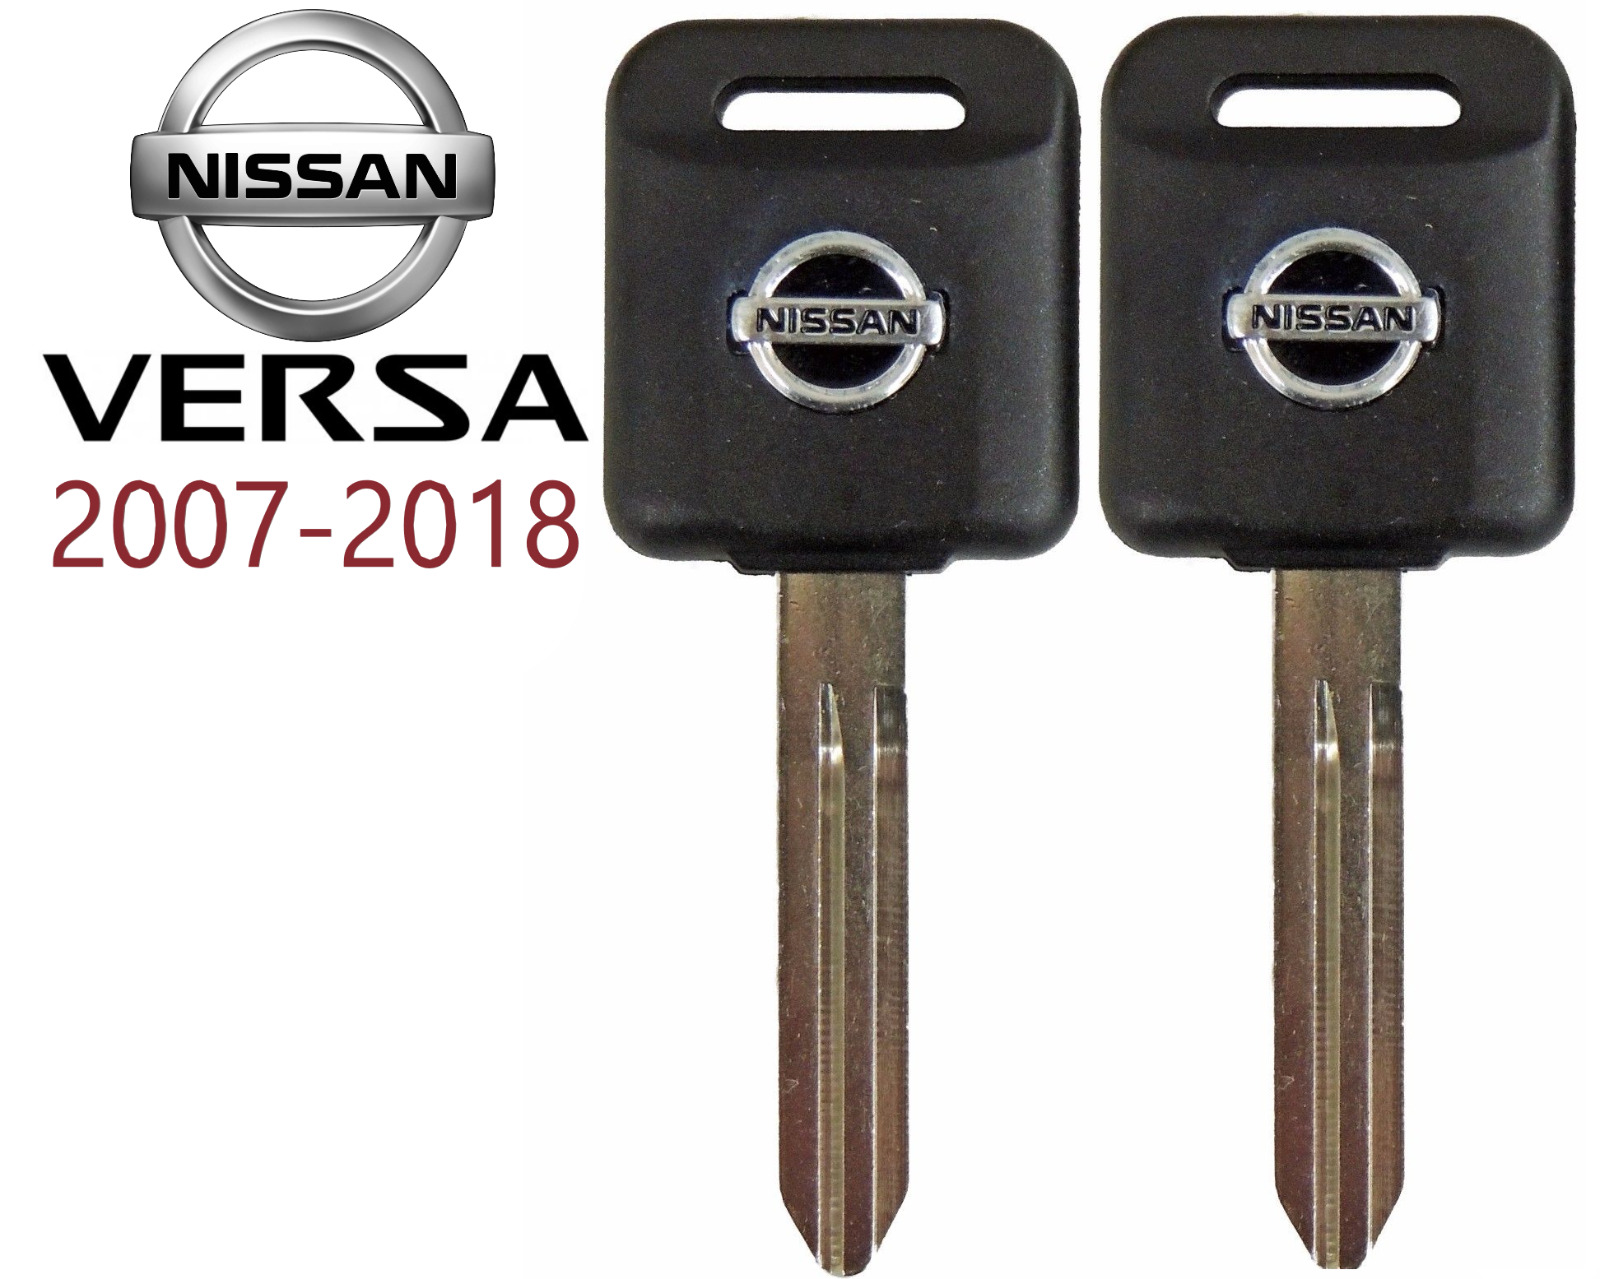 2 NEW VERSA 2007-2018 N104 Transponder Chip Key (46)  Best Quality A+++